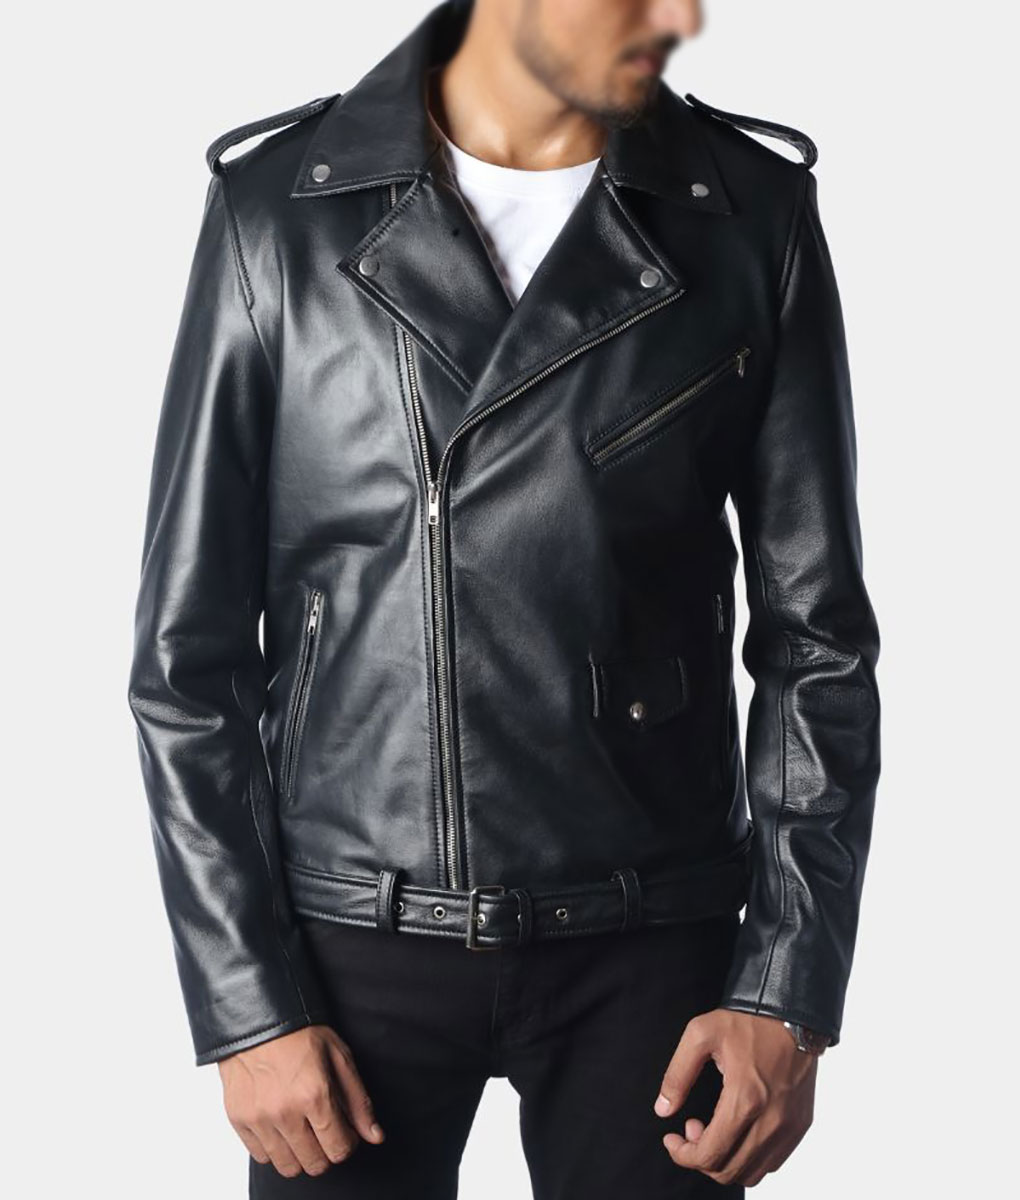 Marlon Brando The Wild One Black Leather Jacket (4)